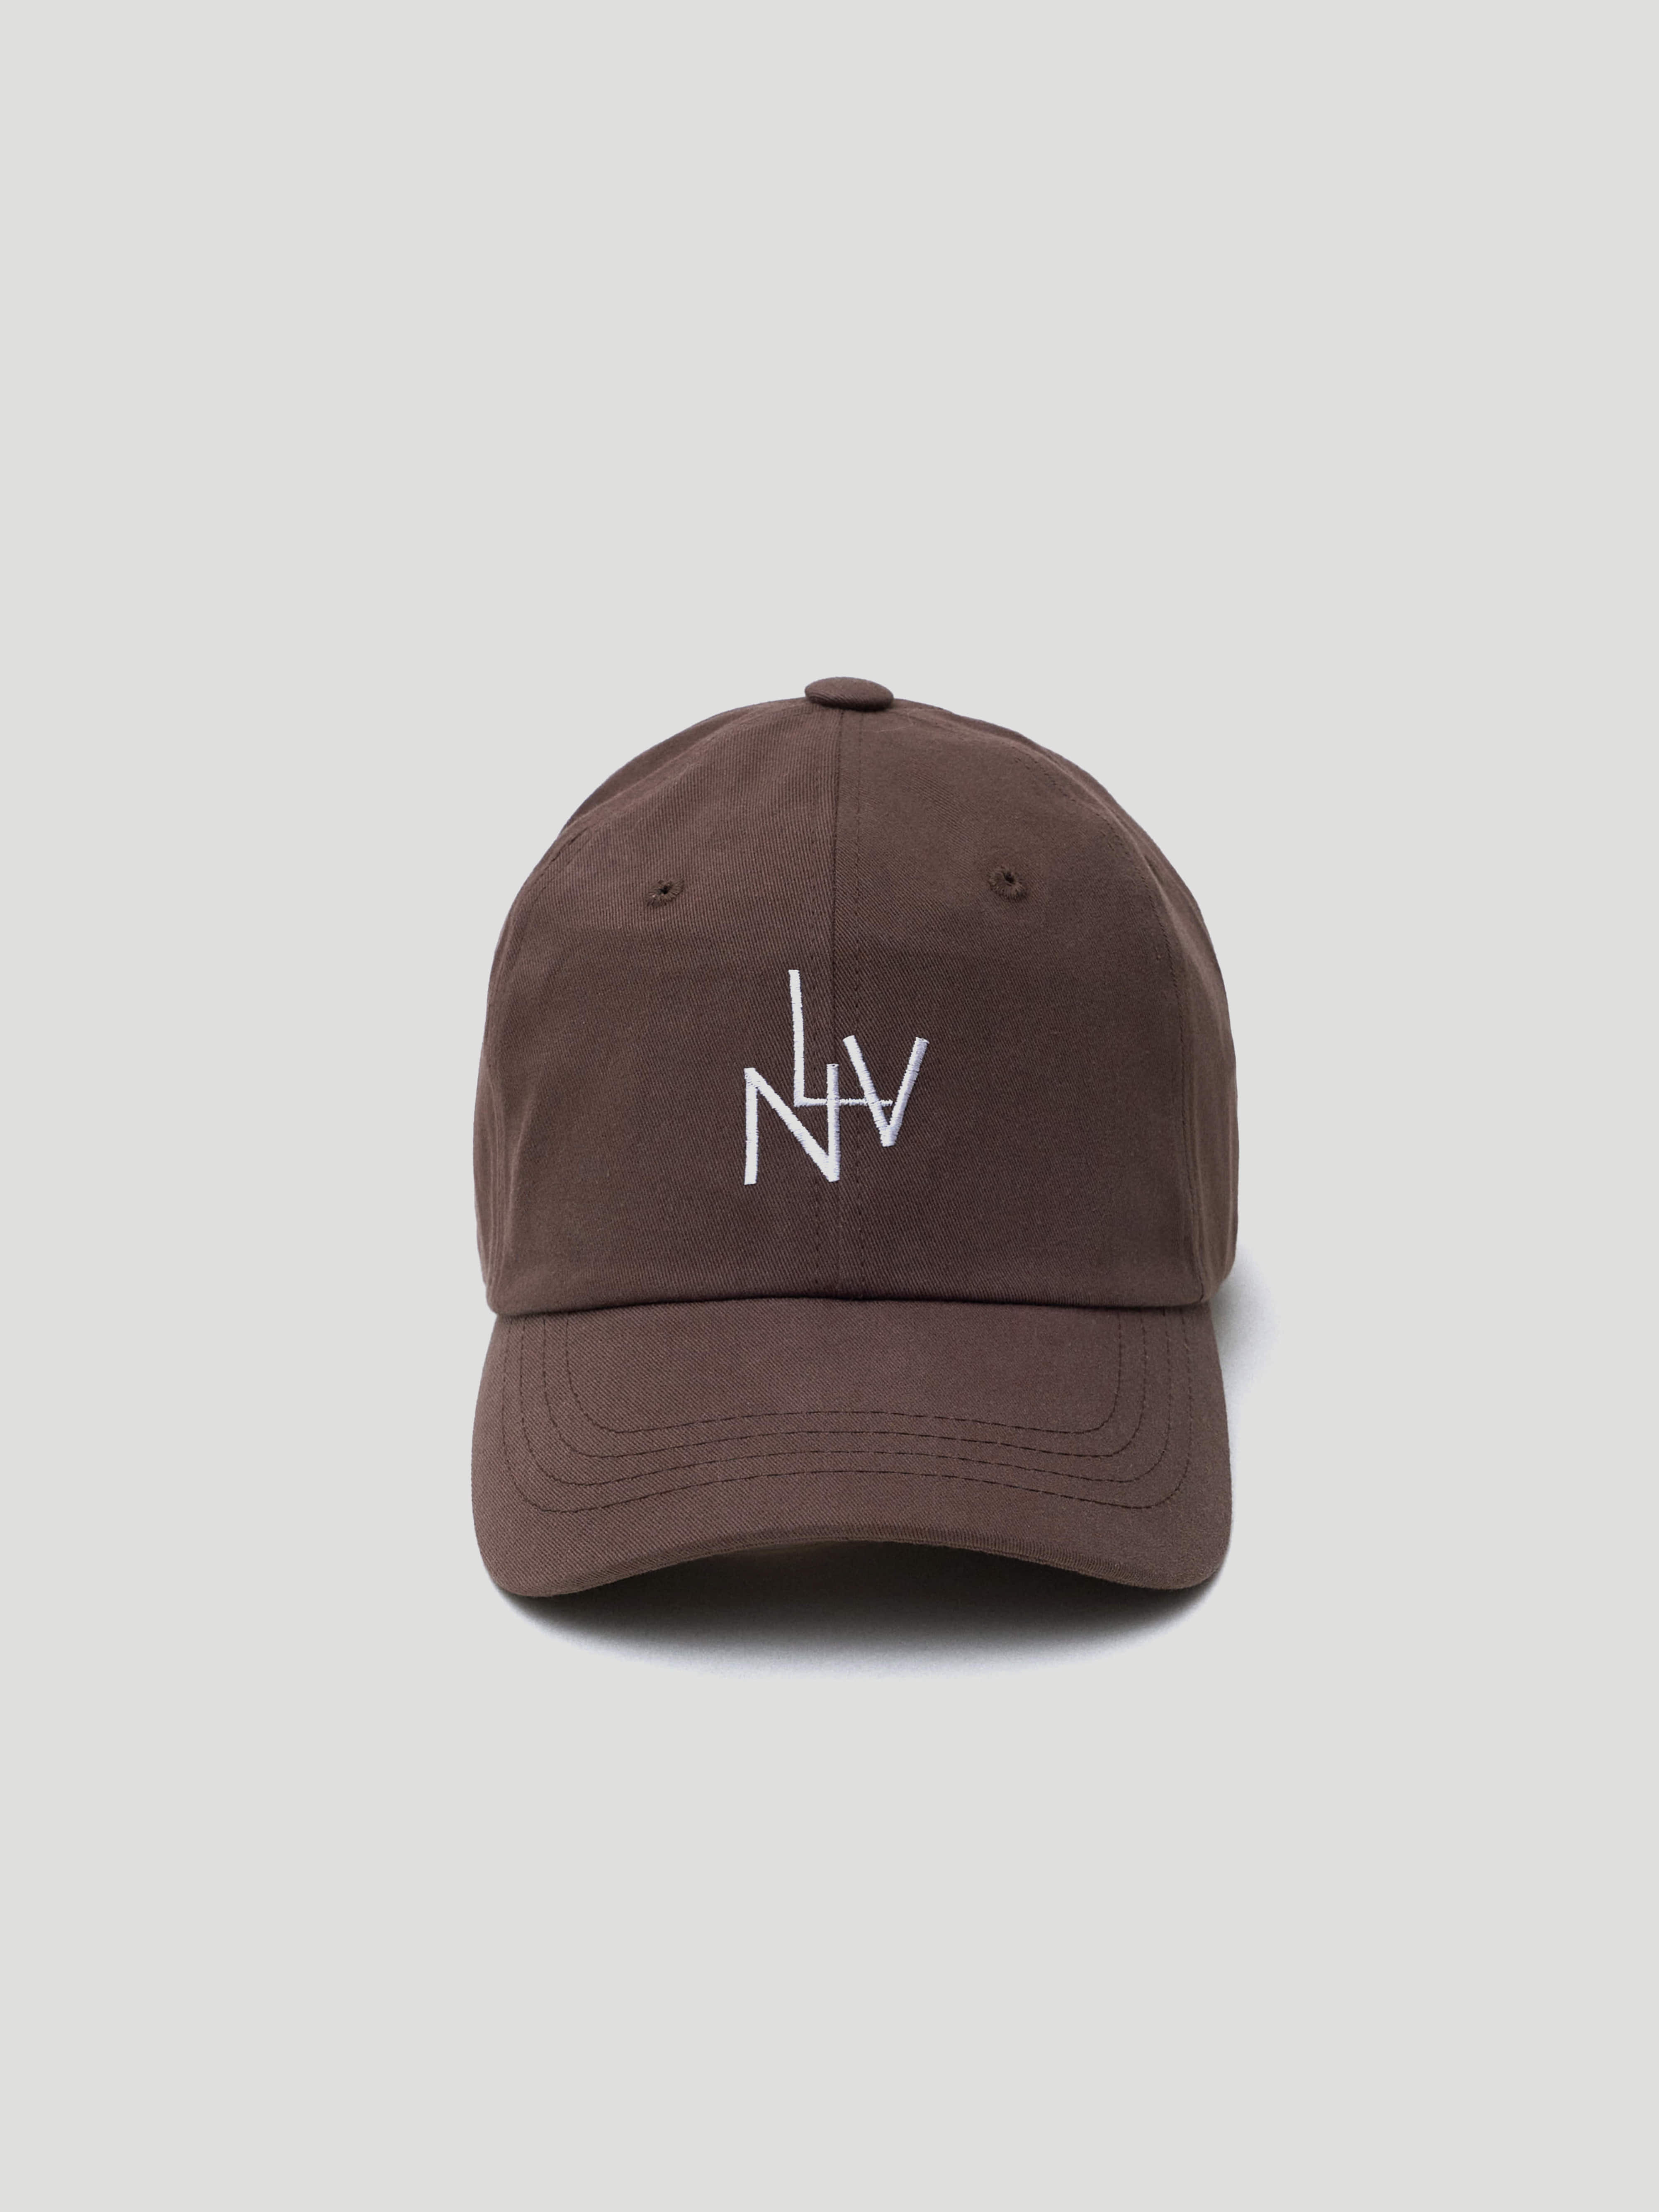 LNV Brown Ball cap (브라운)